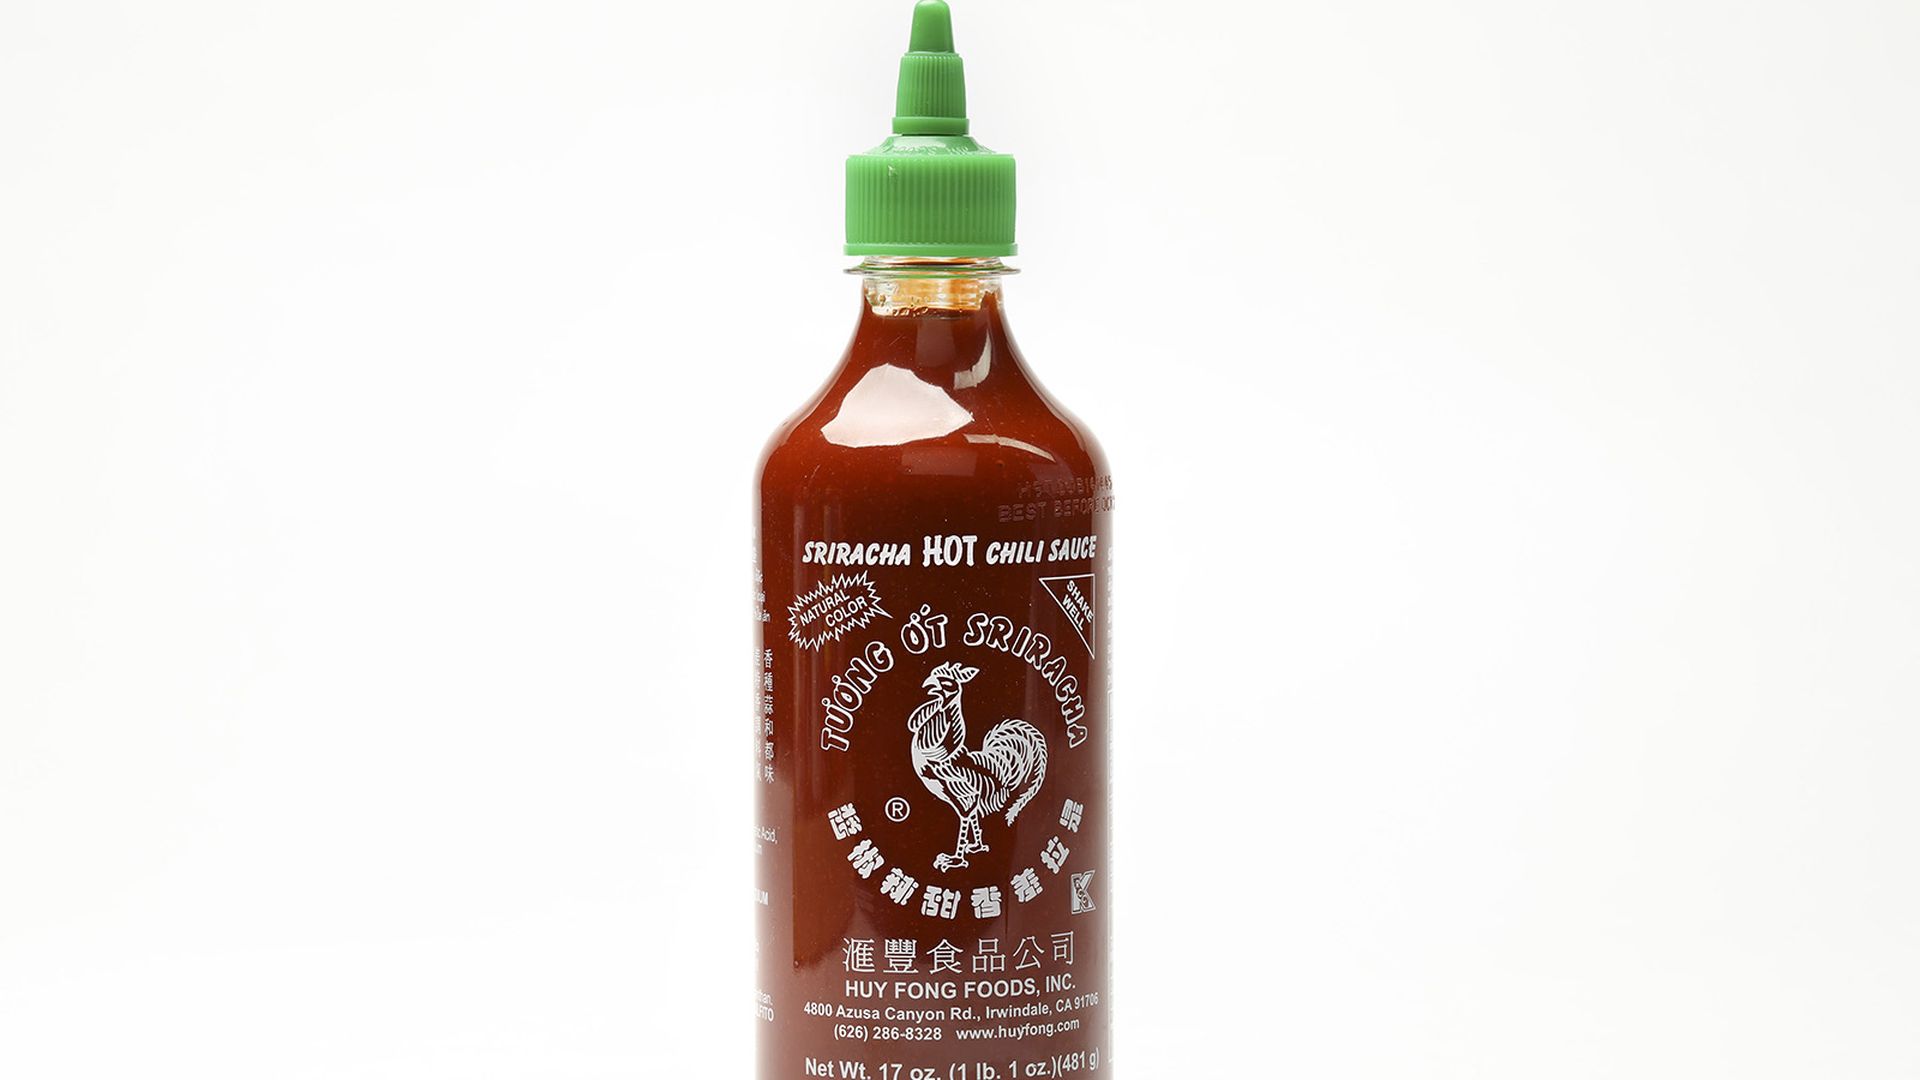 Bottle of Huy Fong Foods sriracha sauce